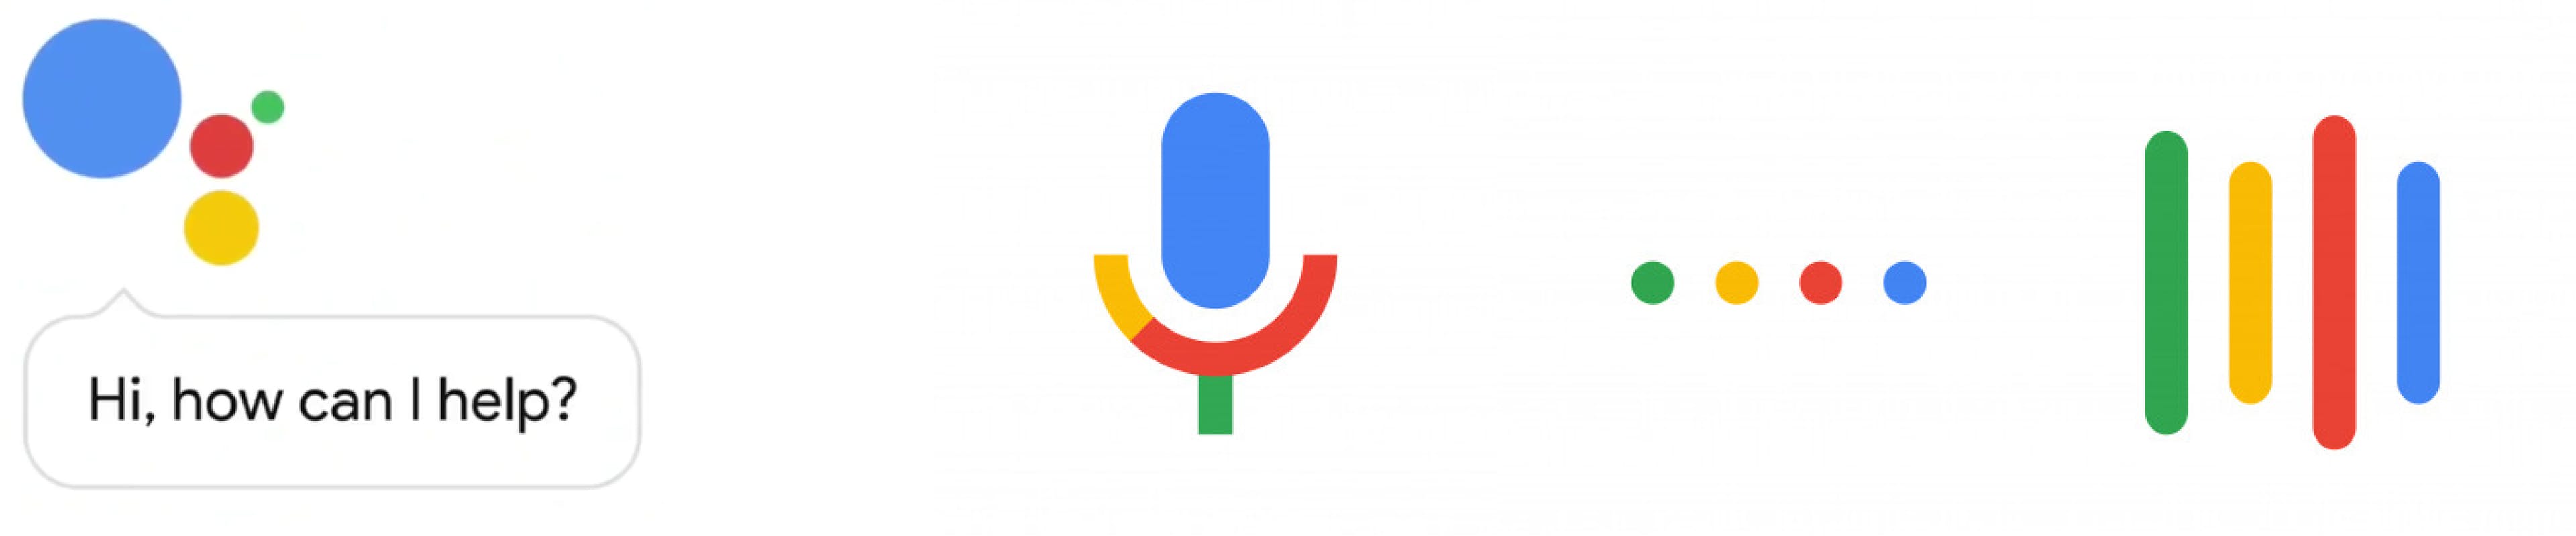 Google Voice Assistant UI design